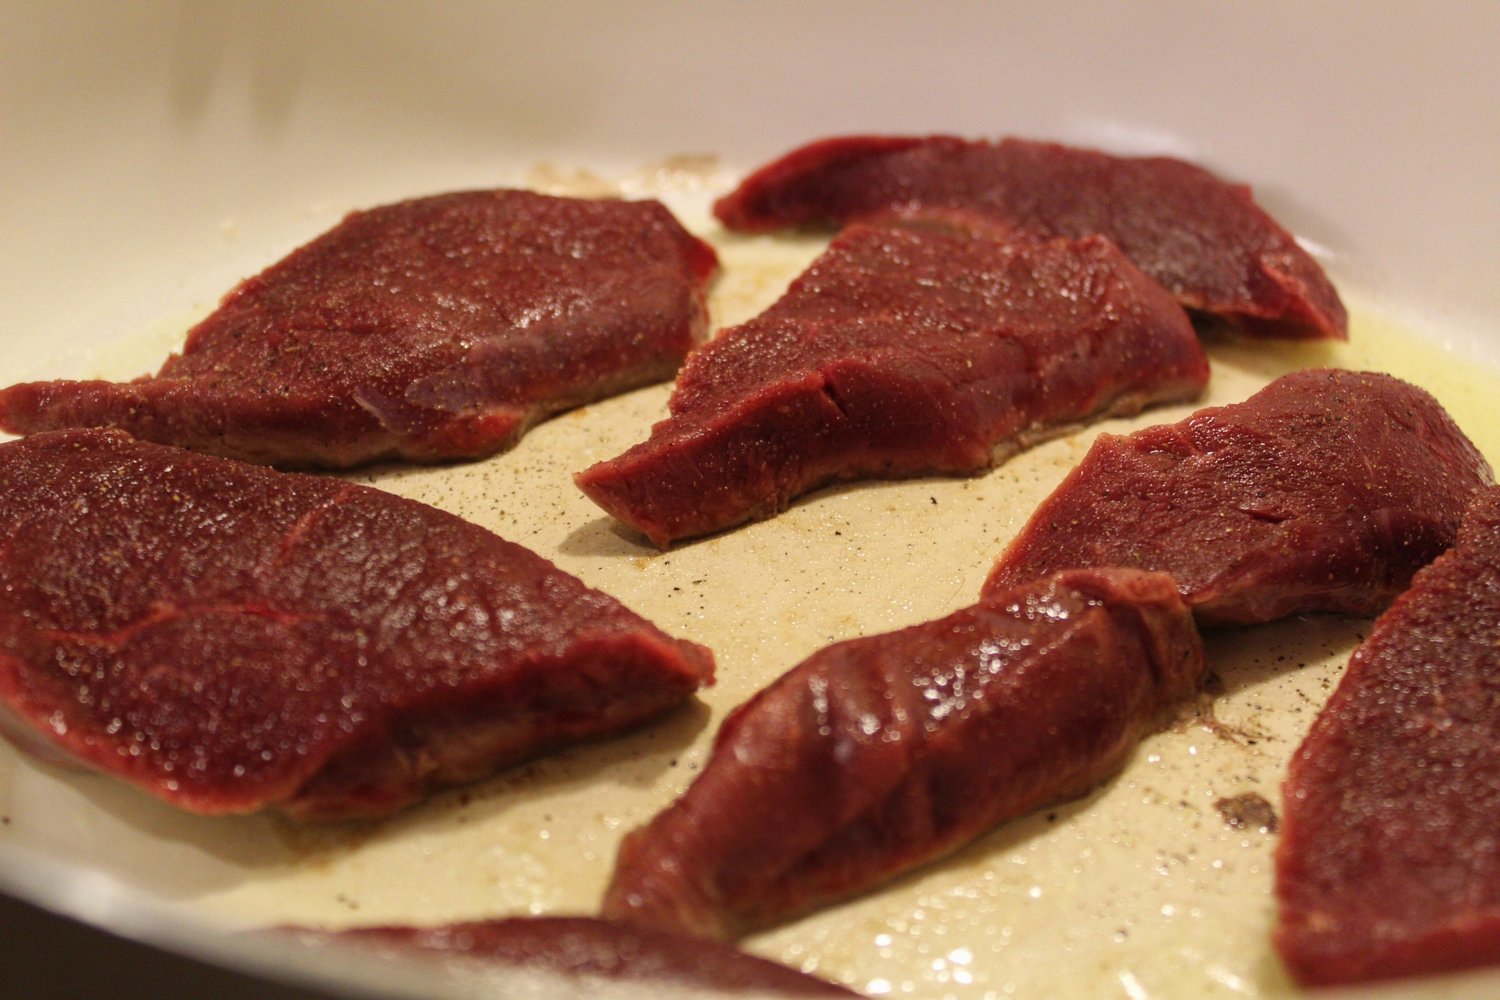 Dark red deer meat sizzling away in the ceramic-coated skillet.